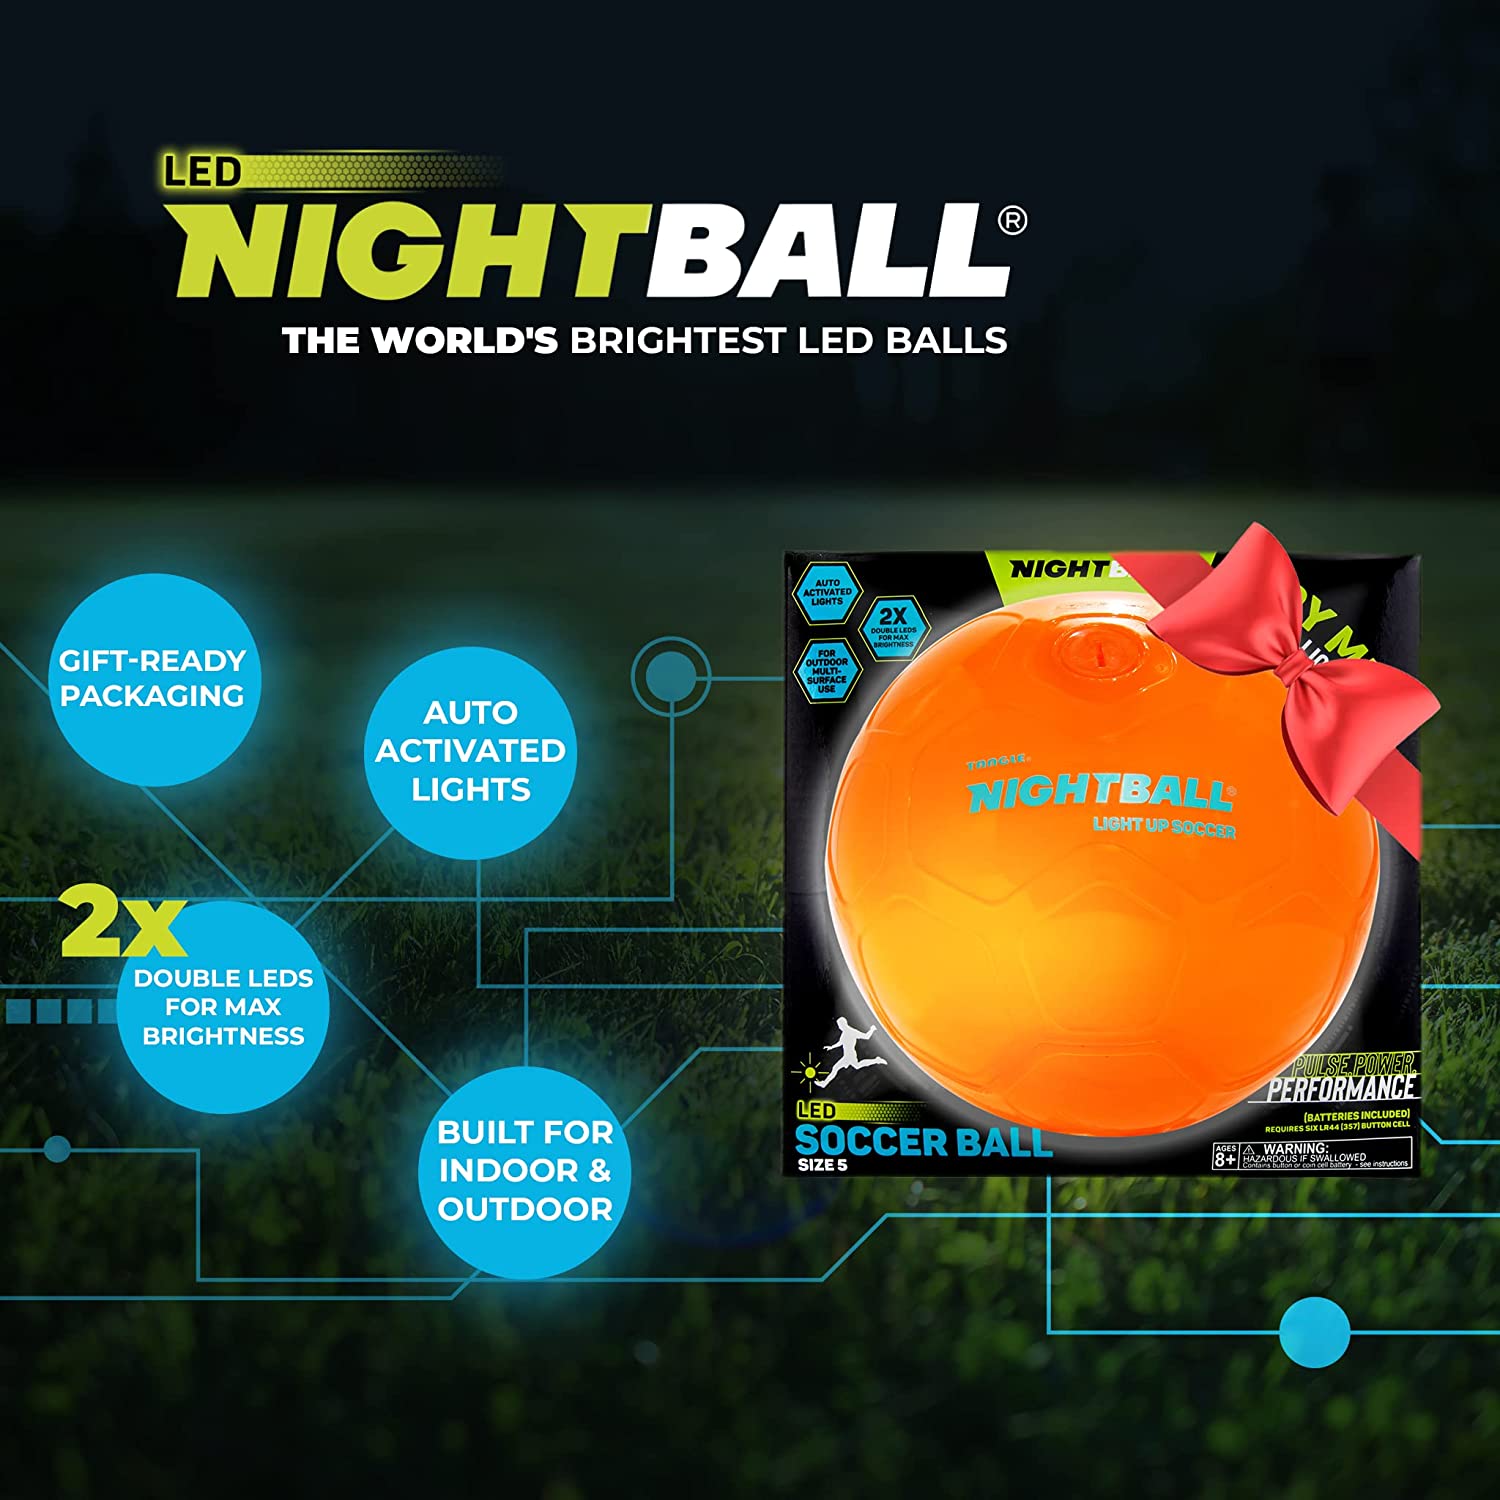 Tangle-Nightball Glow in the Dark Light Up Soccer Ball Orange-12866-Legacy Toys